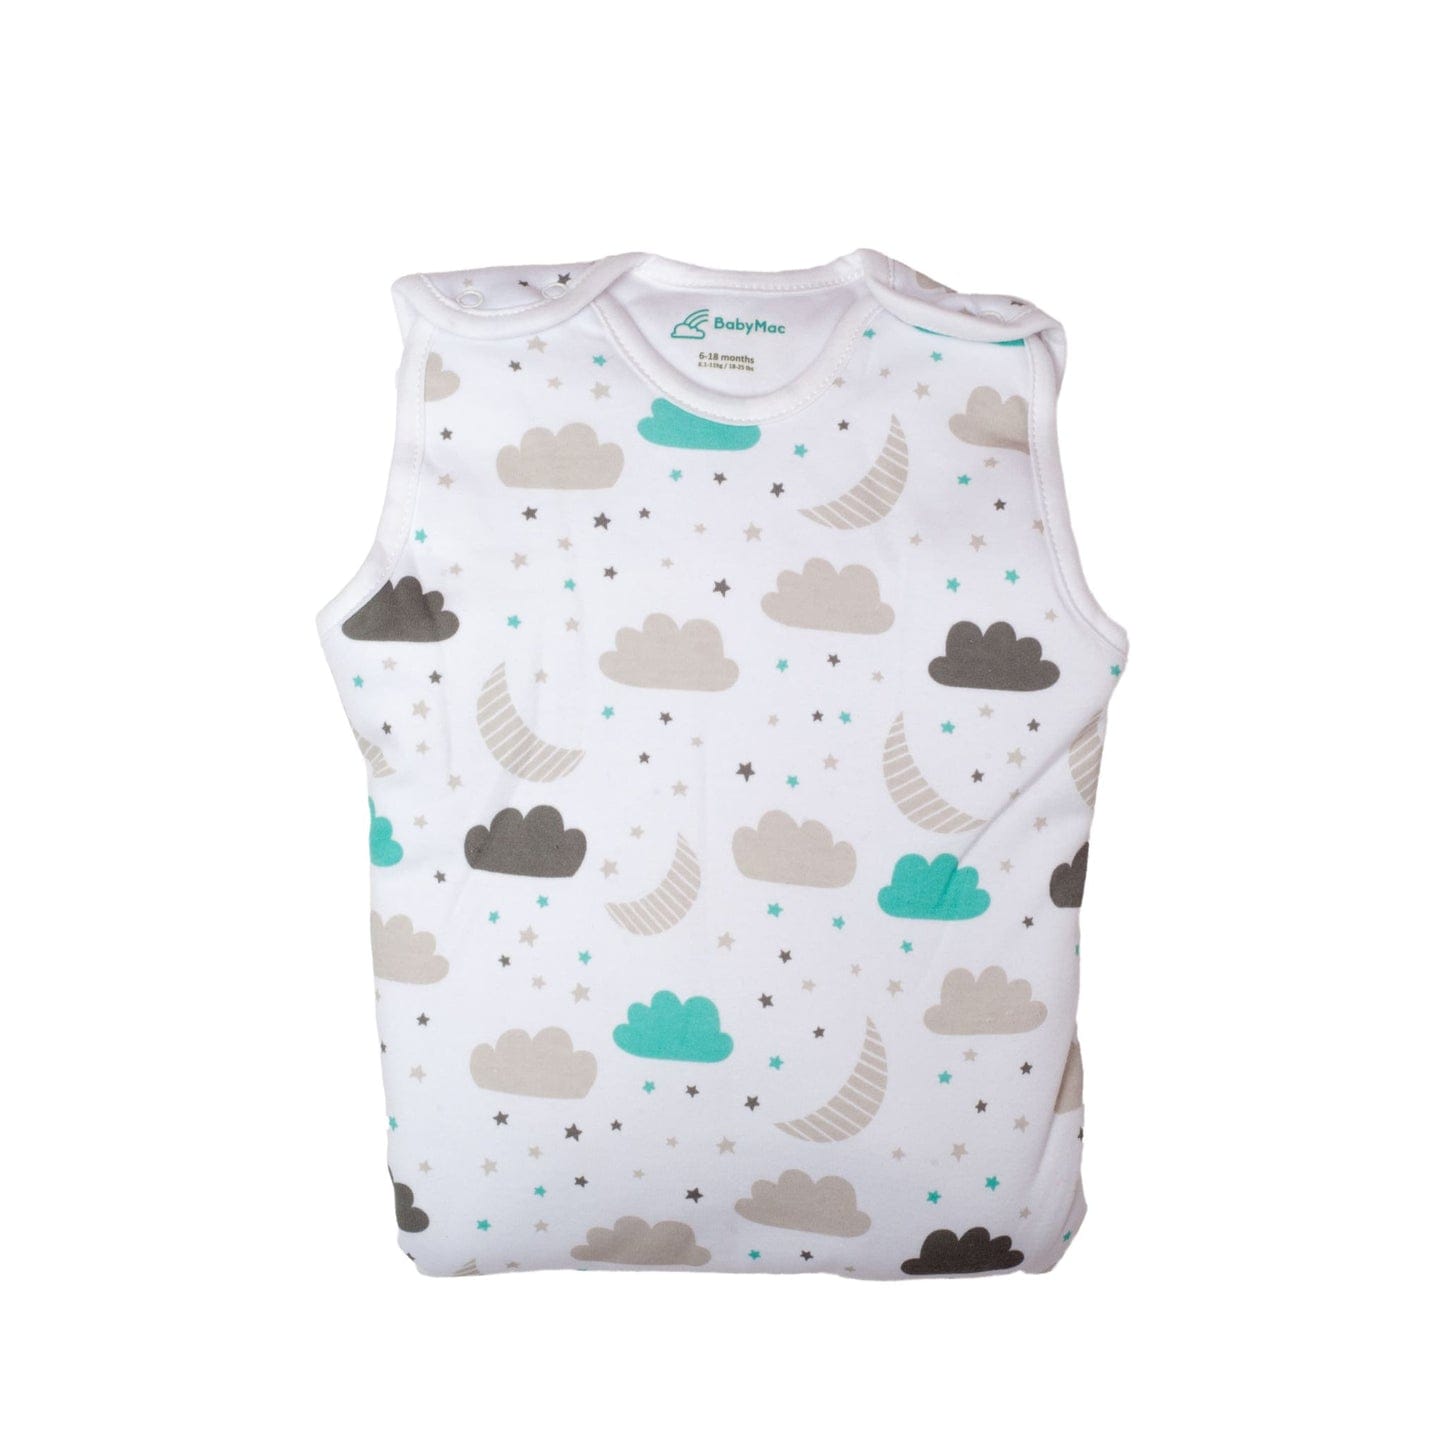 Organic Sleeping Bag 2.5 Tog For Baby By BabyMac - Stylemykid.com